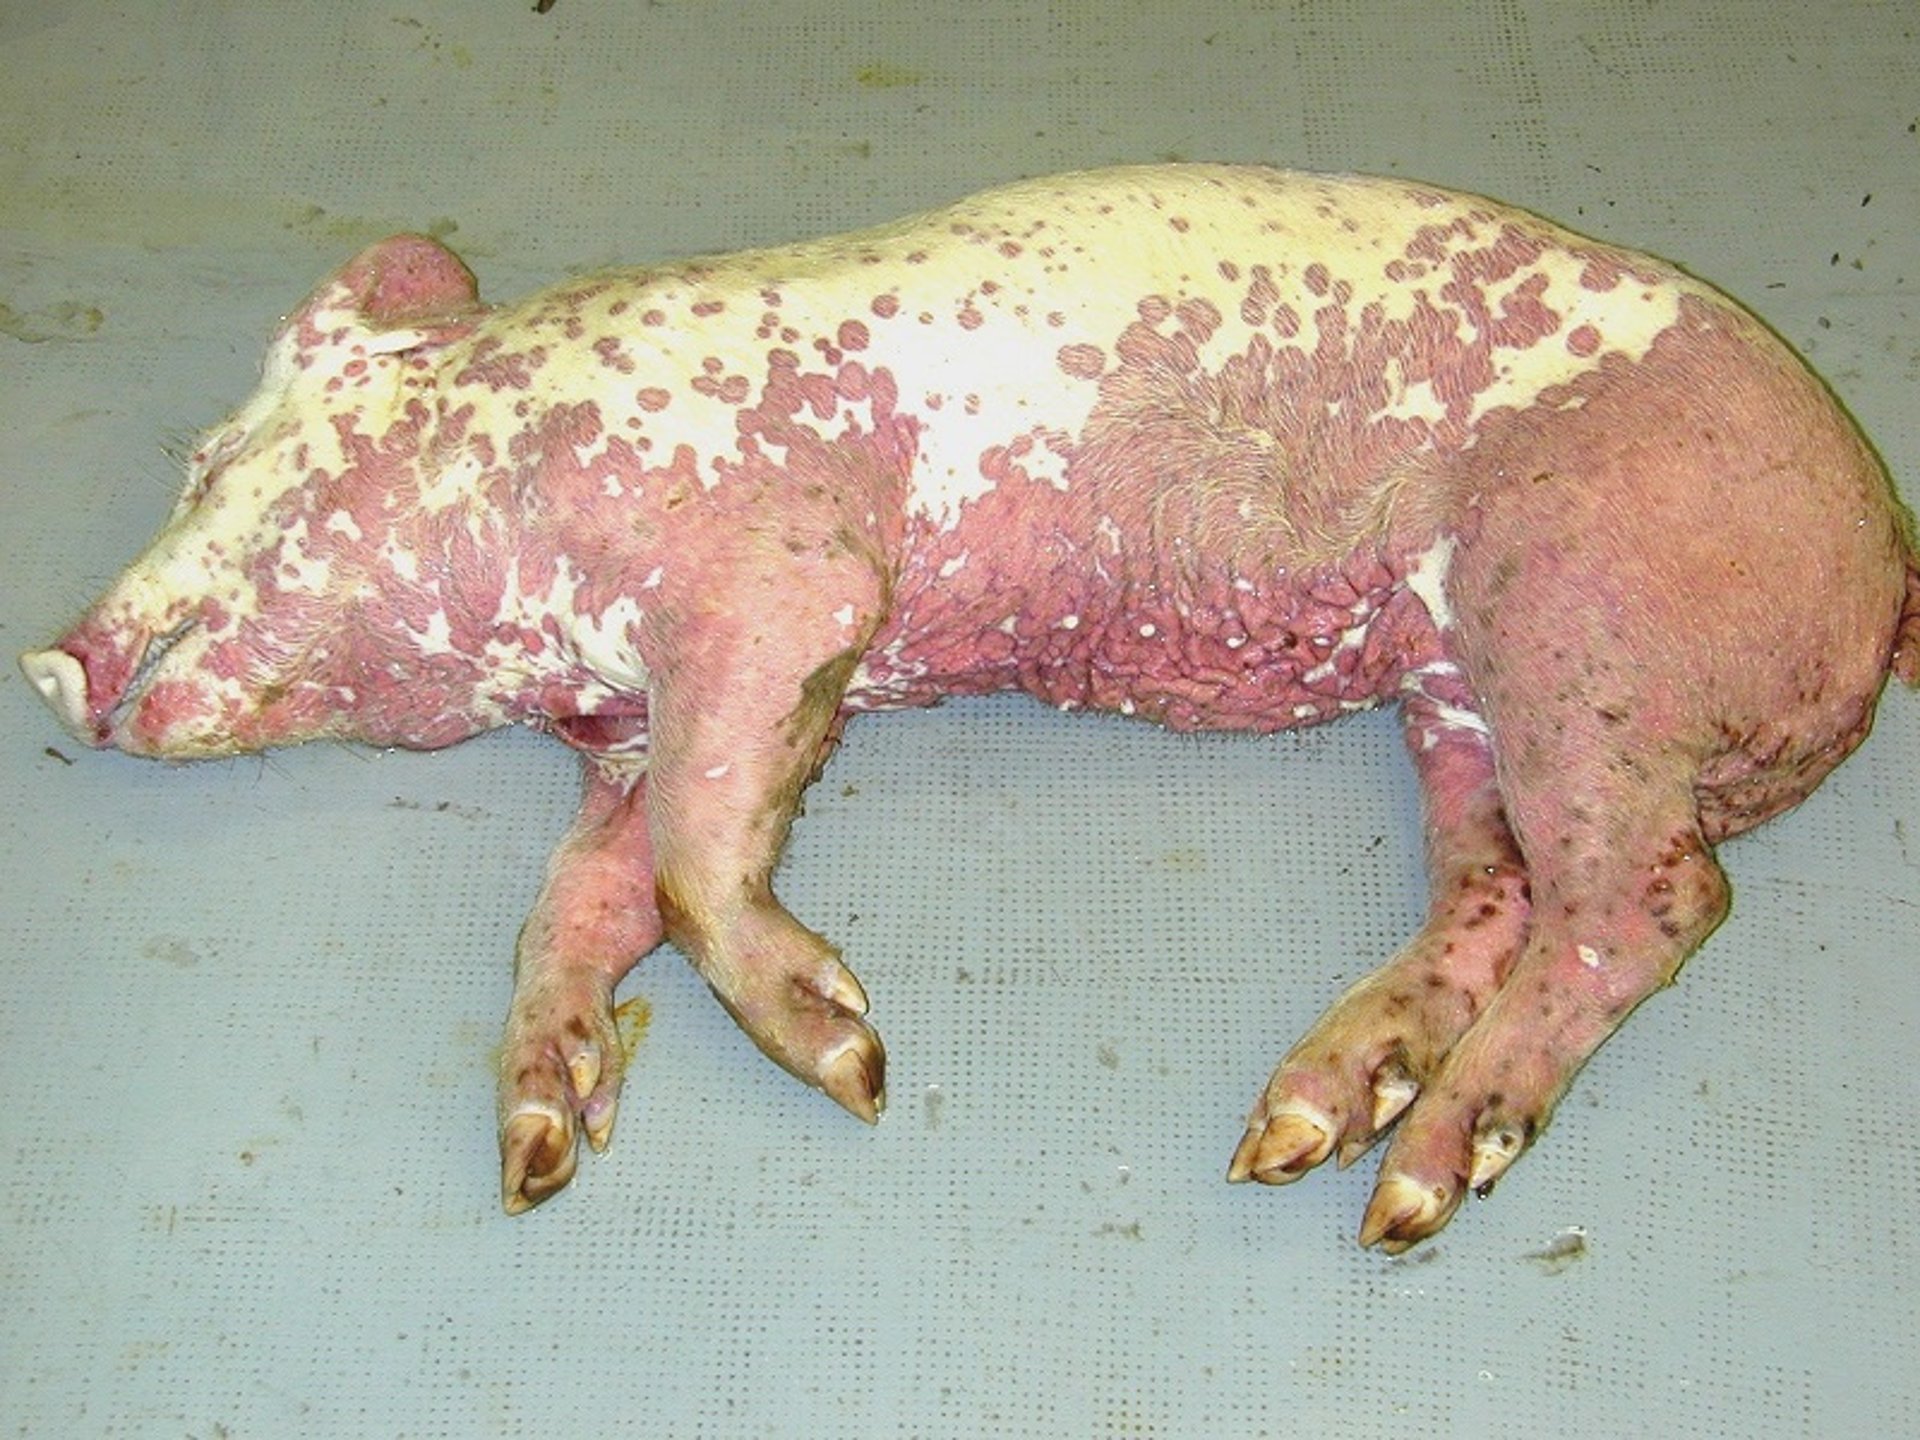 Porcine dermatitis and nephropathy syndrome, pig